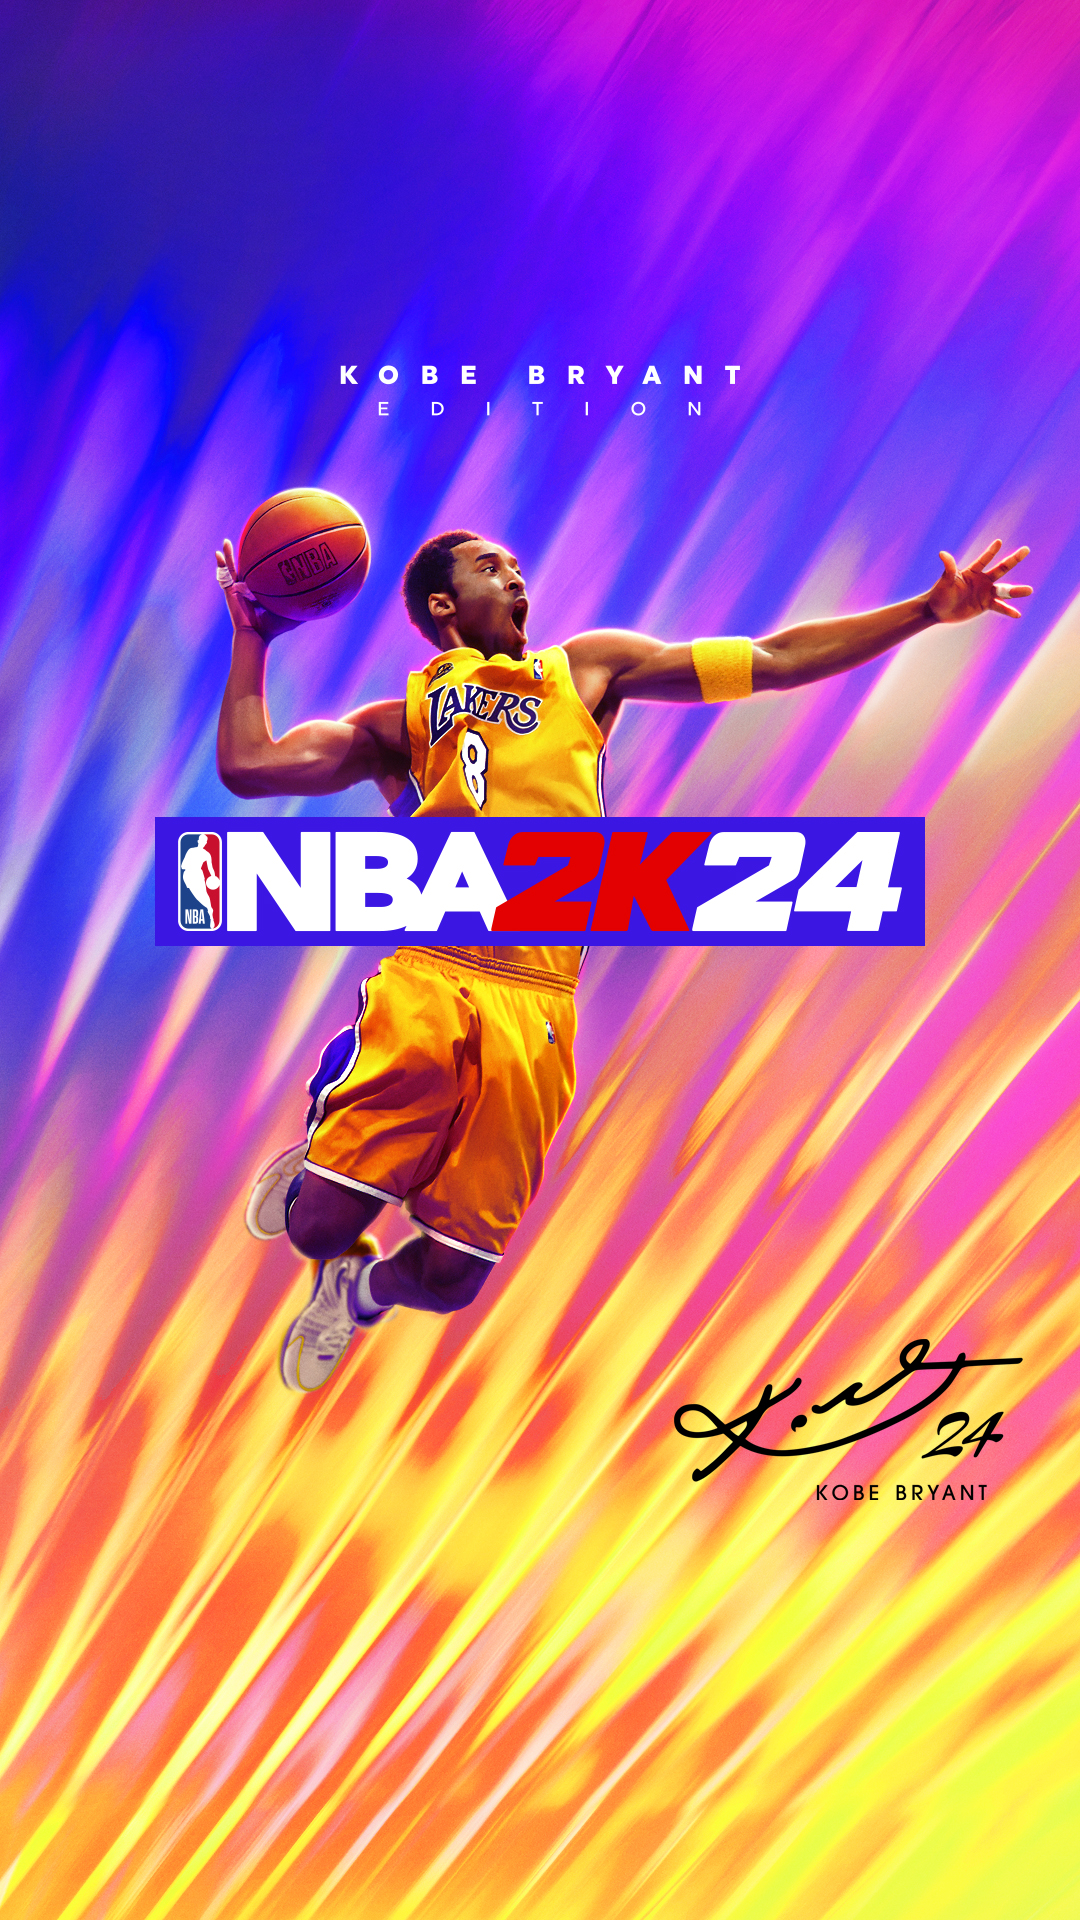 Kobe Bryant Nba 2k24 Wallpaper